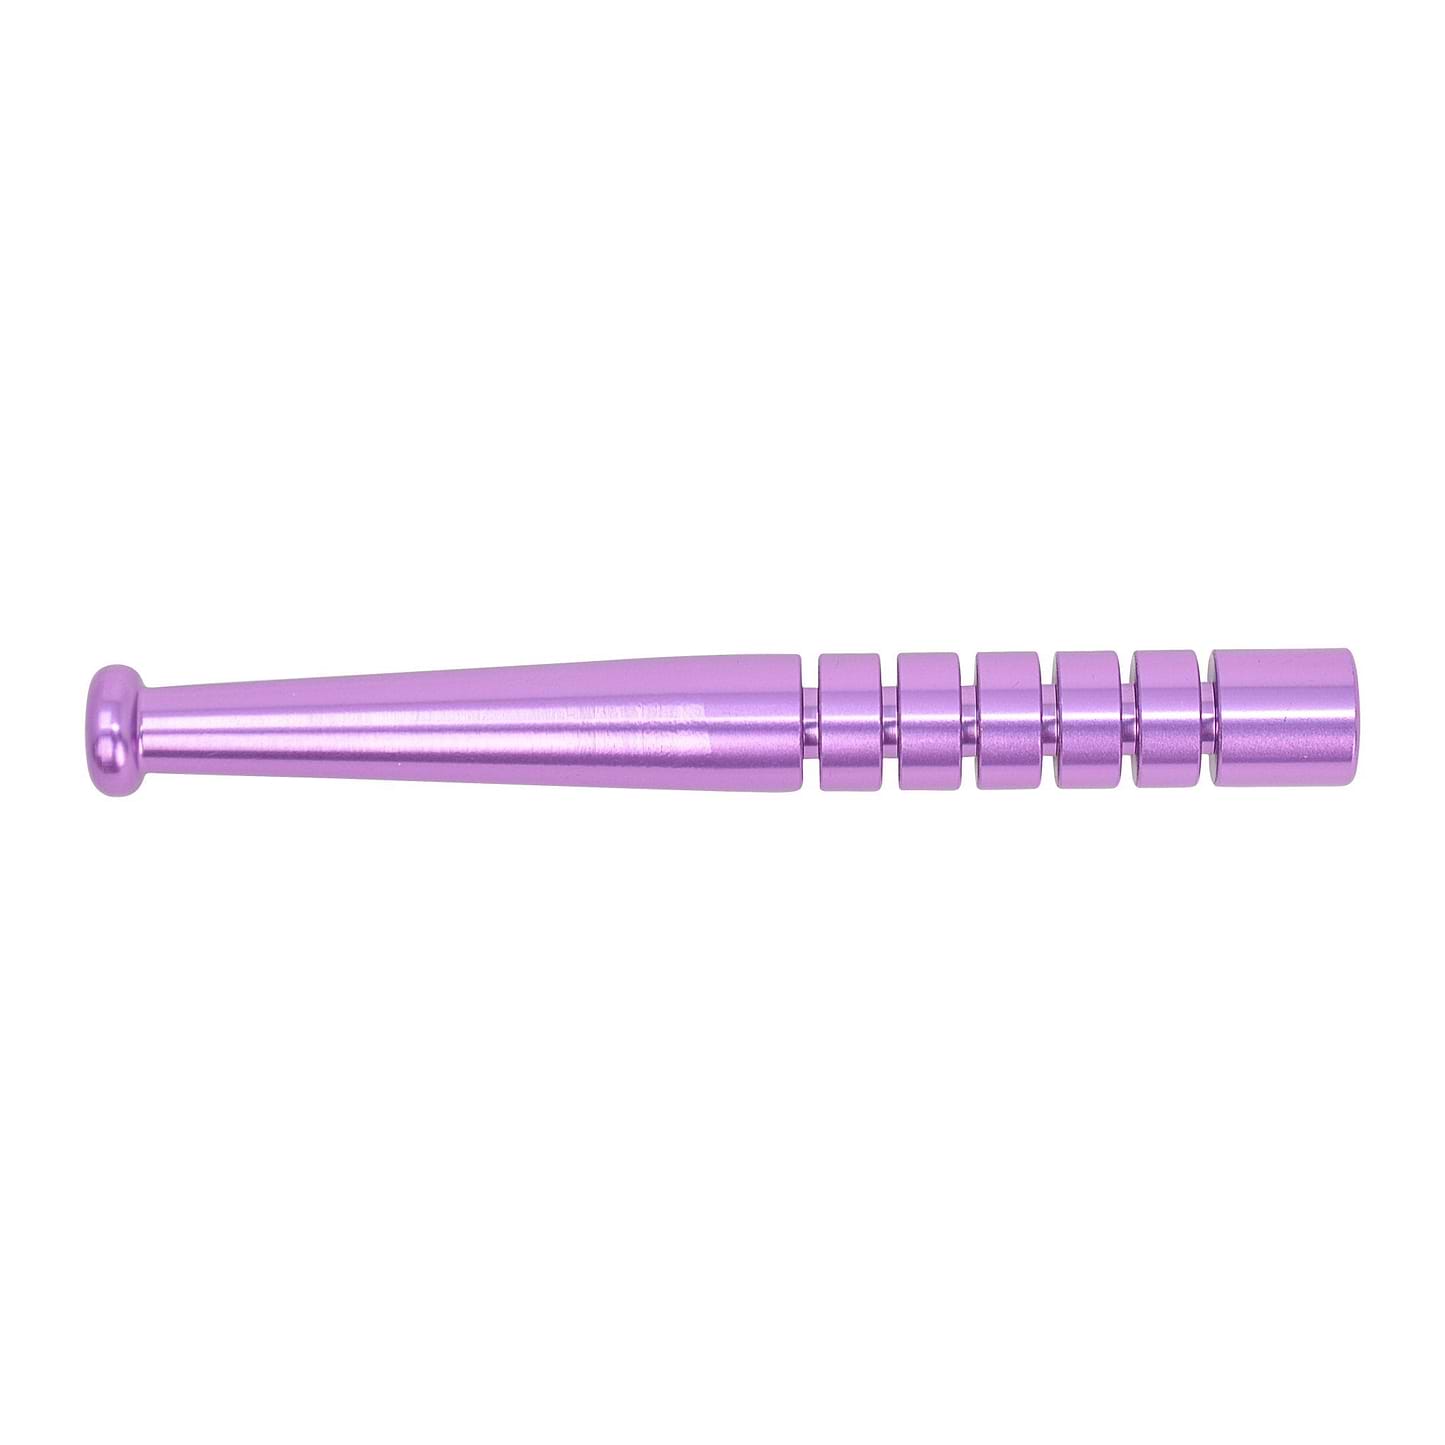 Purple metal oney little pipe one hitter smoking device with baseball bat design textured ridges